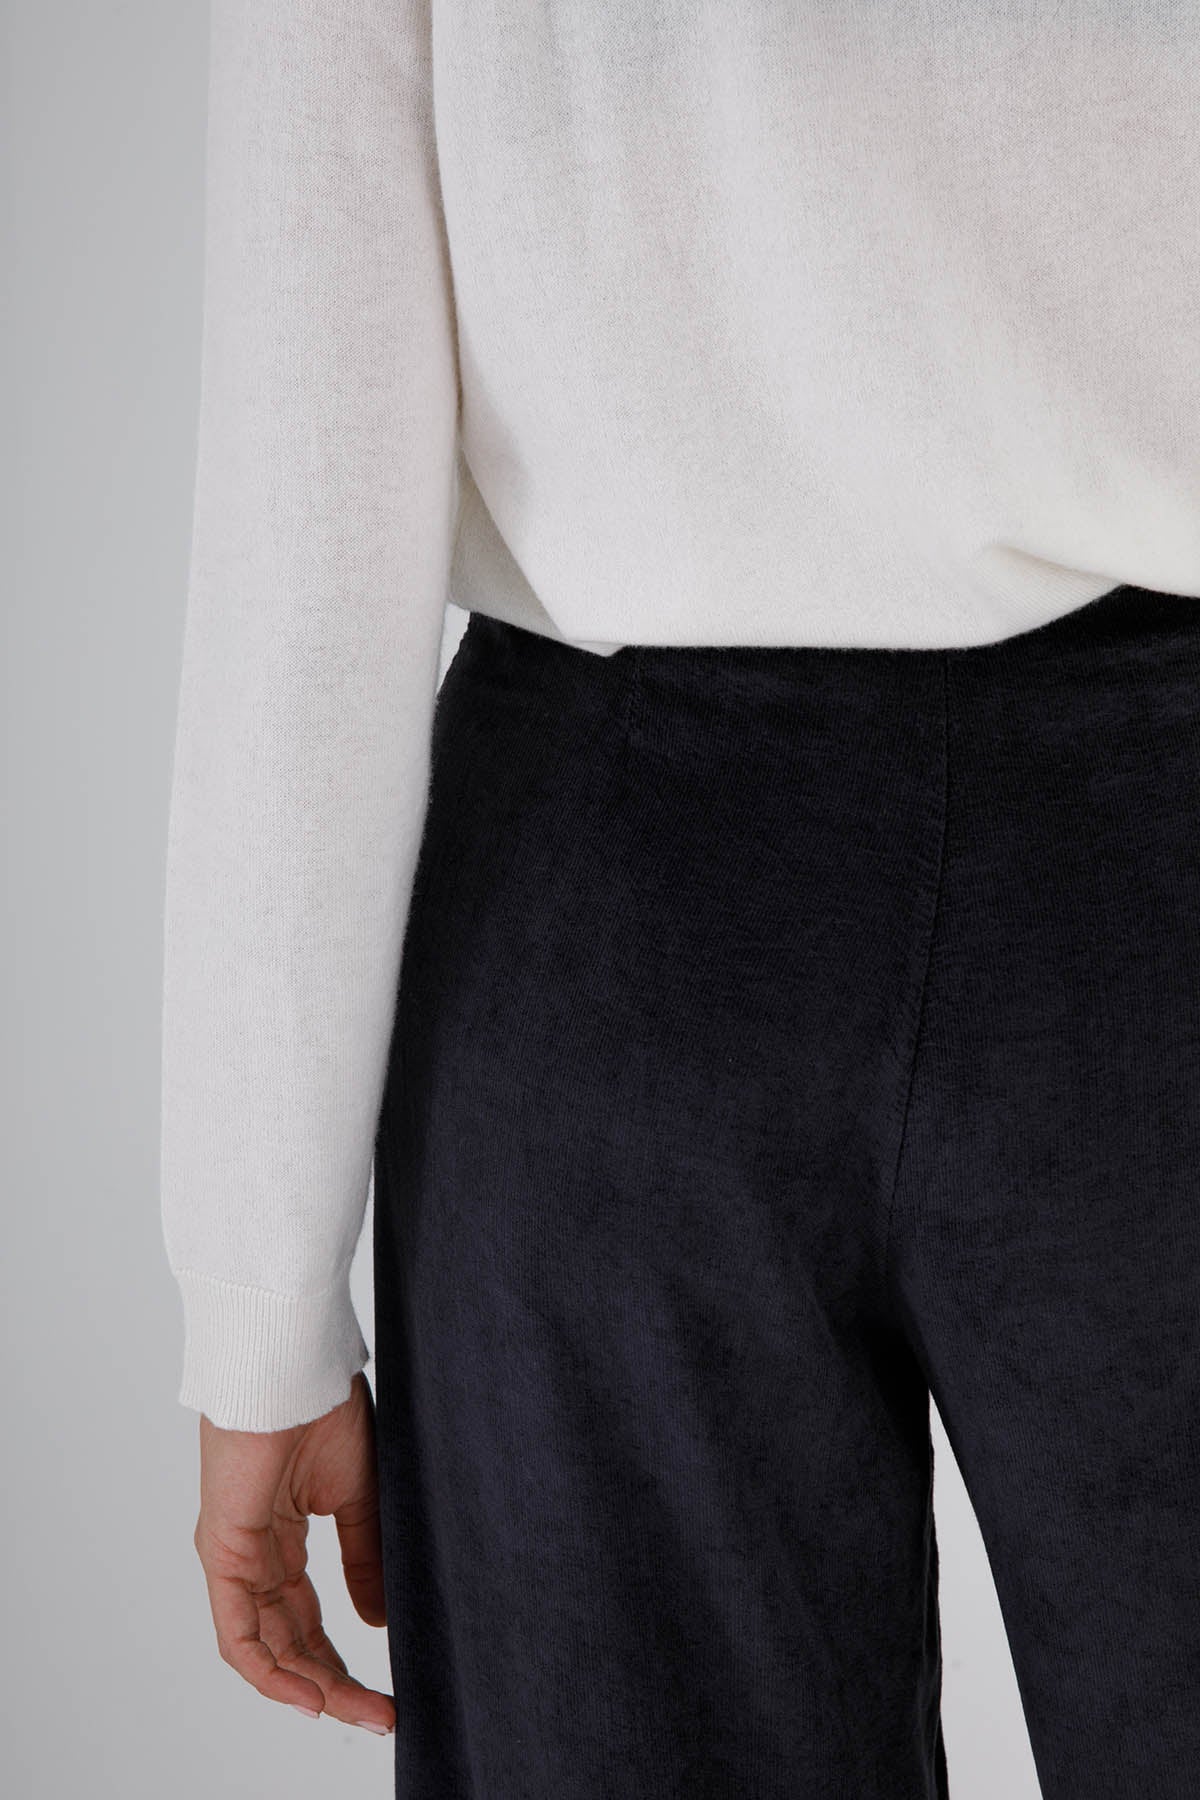 Transit Yüksek Bel Tek Pile Geniş Paça Pantolon-Libas Trendy Fashion Store